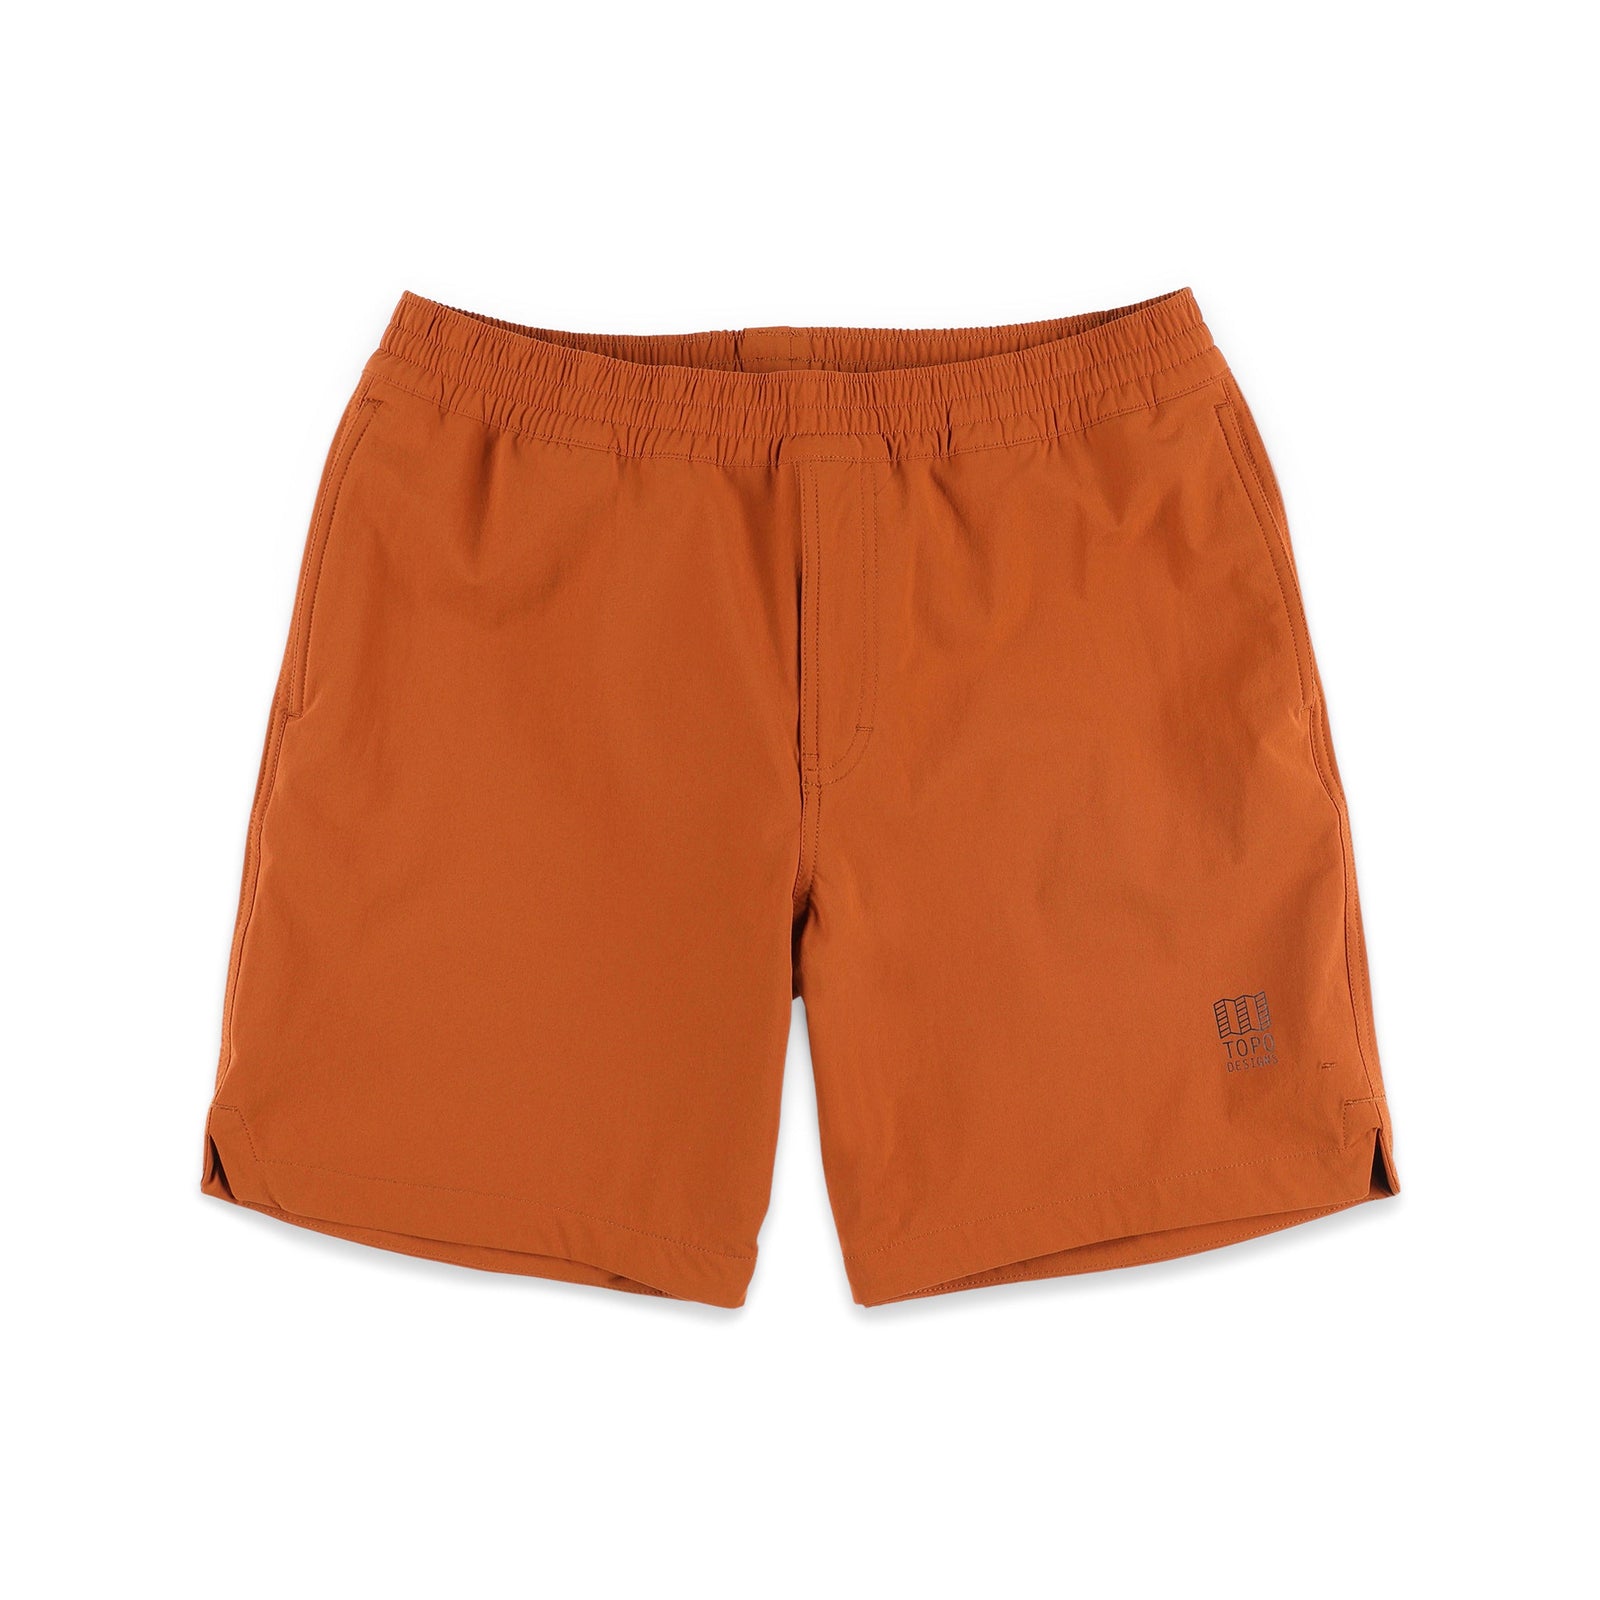 Topo Designs Men's Global lightweight quick dry travel Shorts in "Brick" orange.